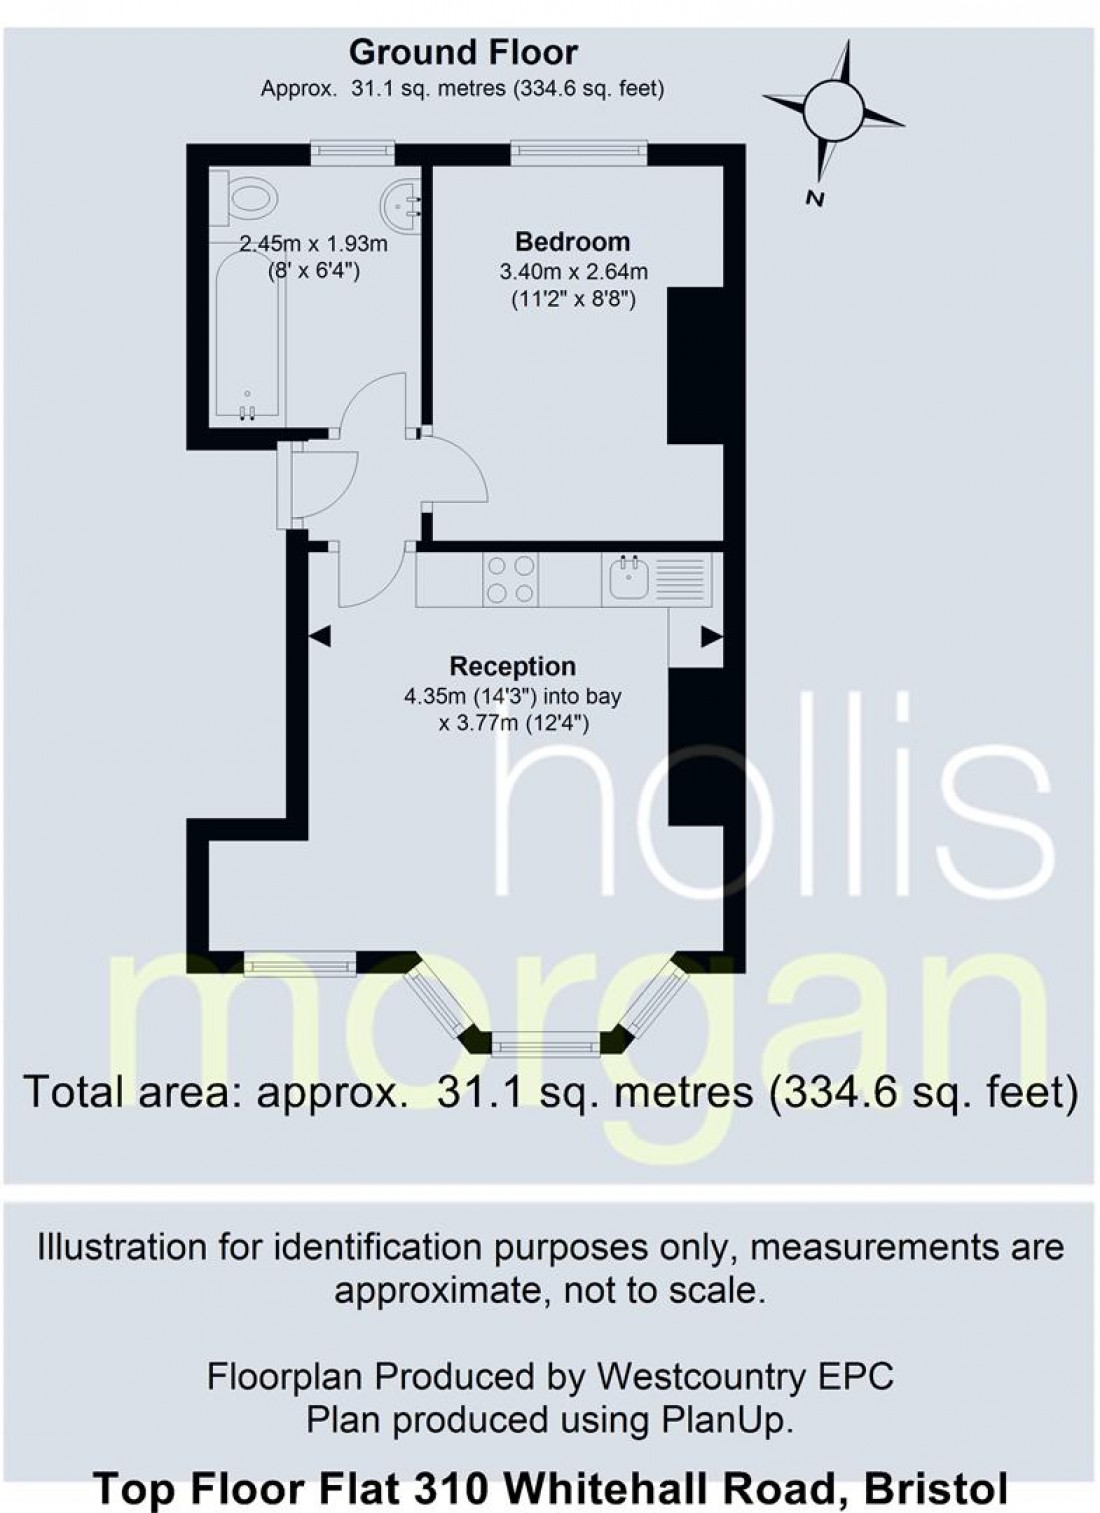 Floorplan for First Floor Flat - 310B Whitehall Road